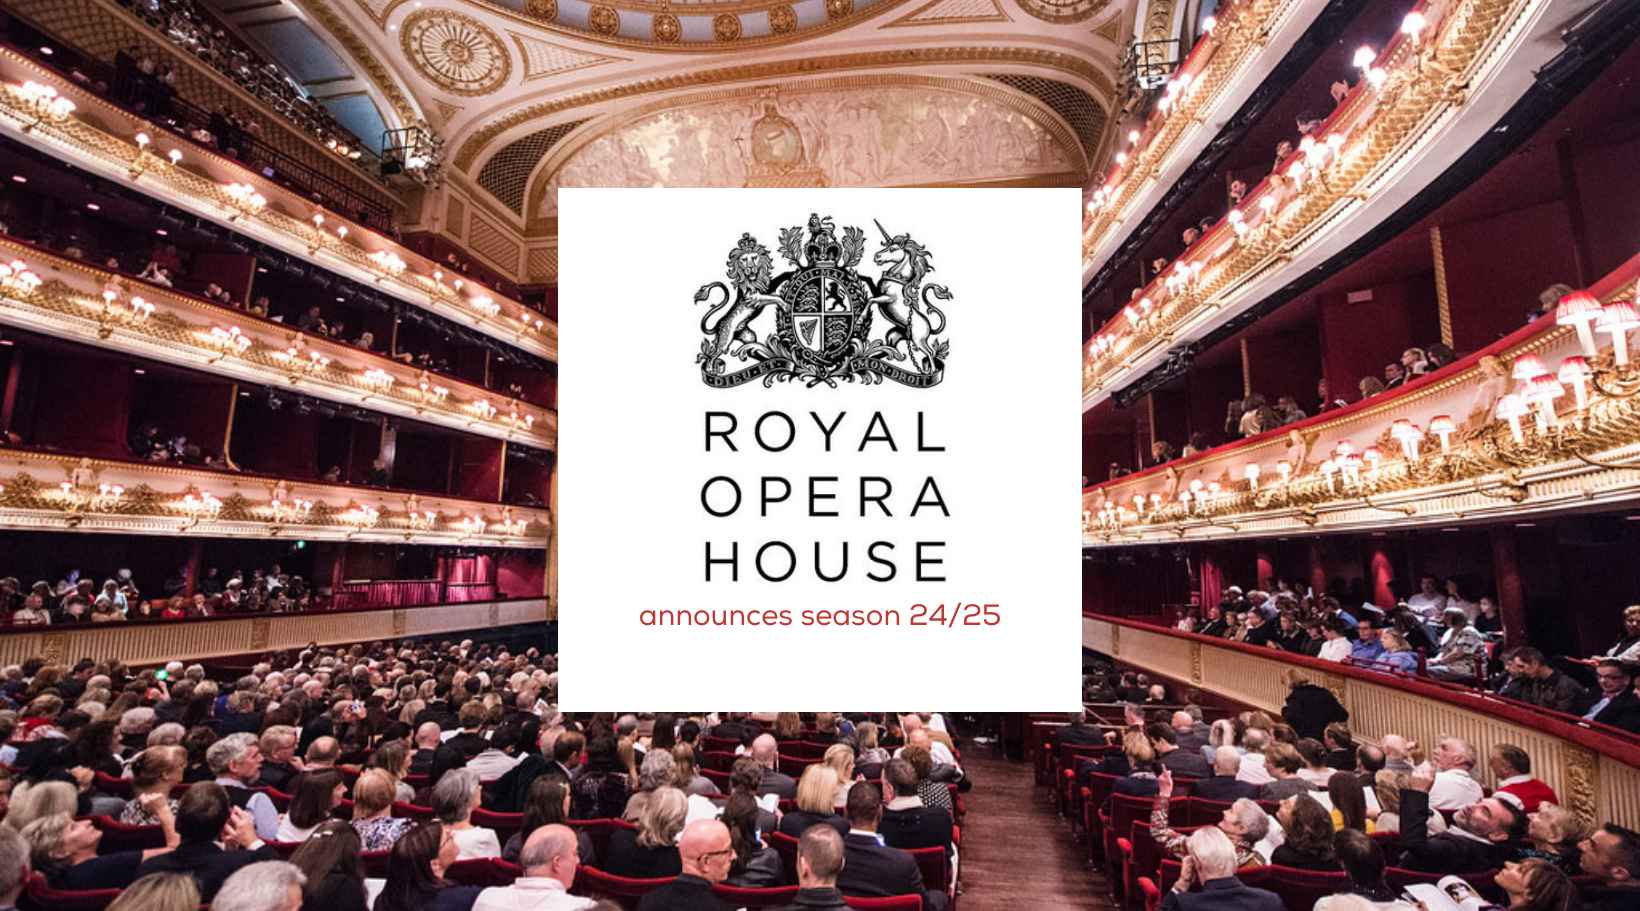 New season in Royal Opera House